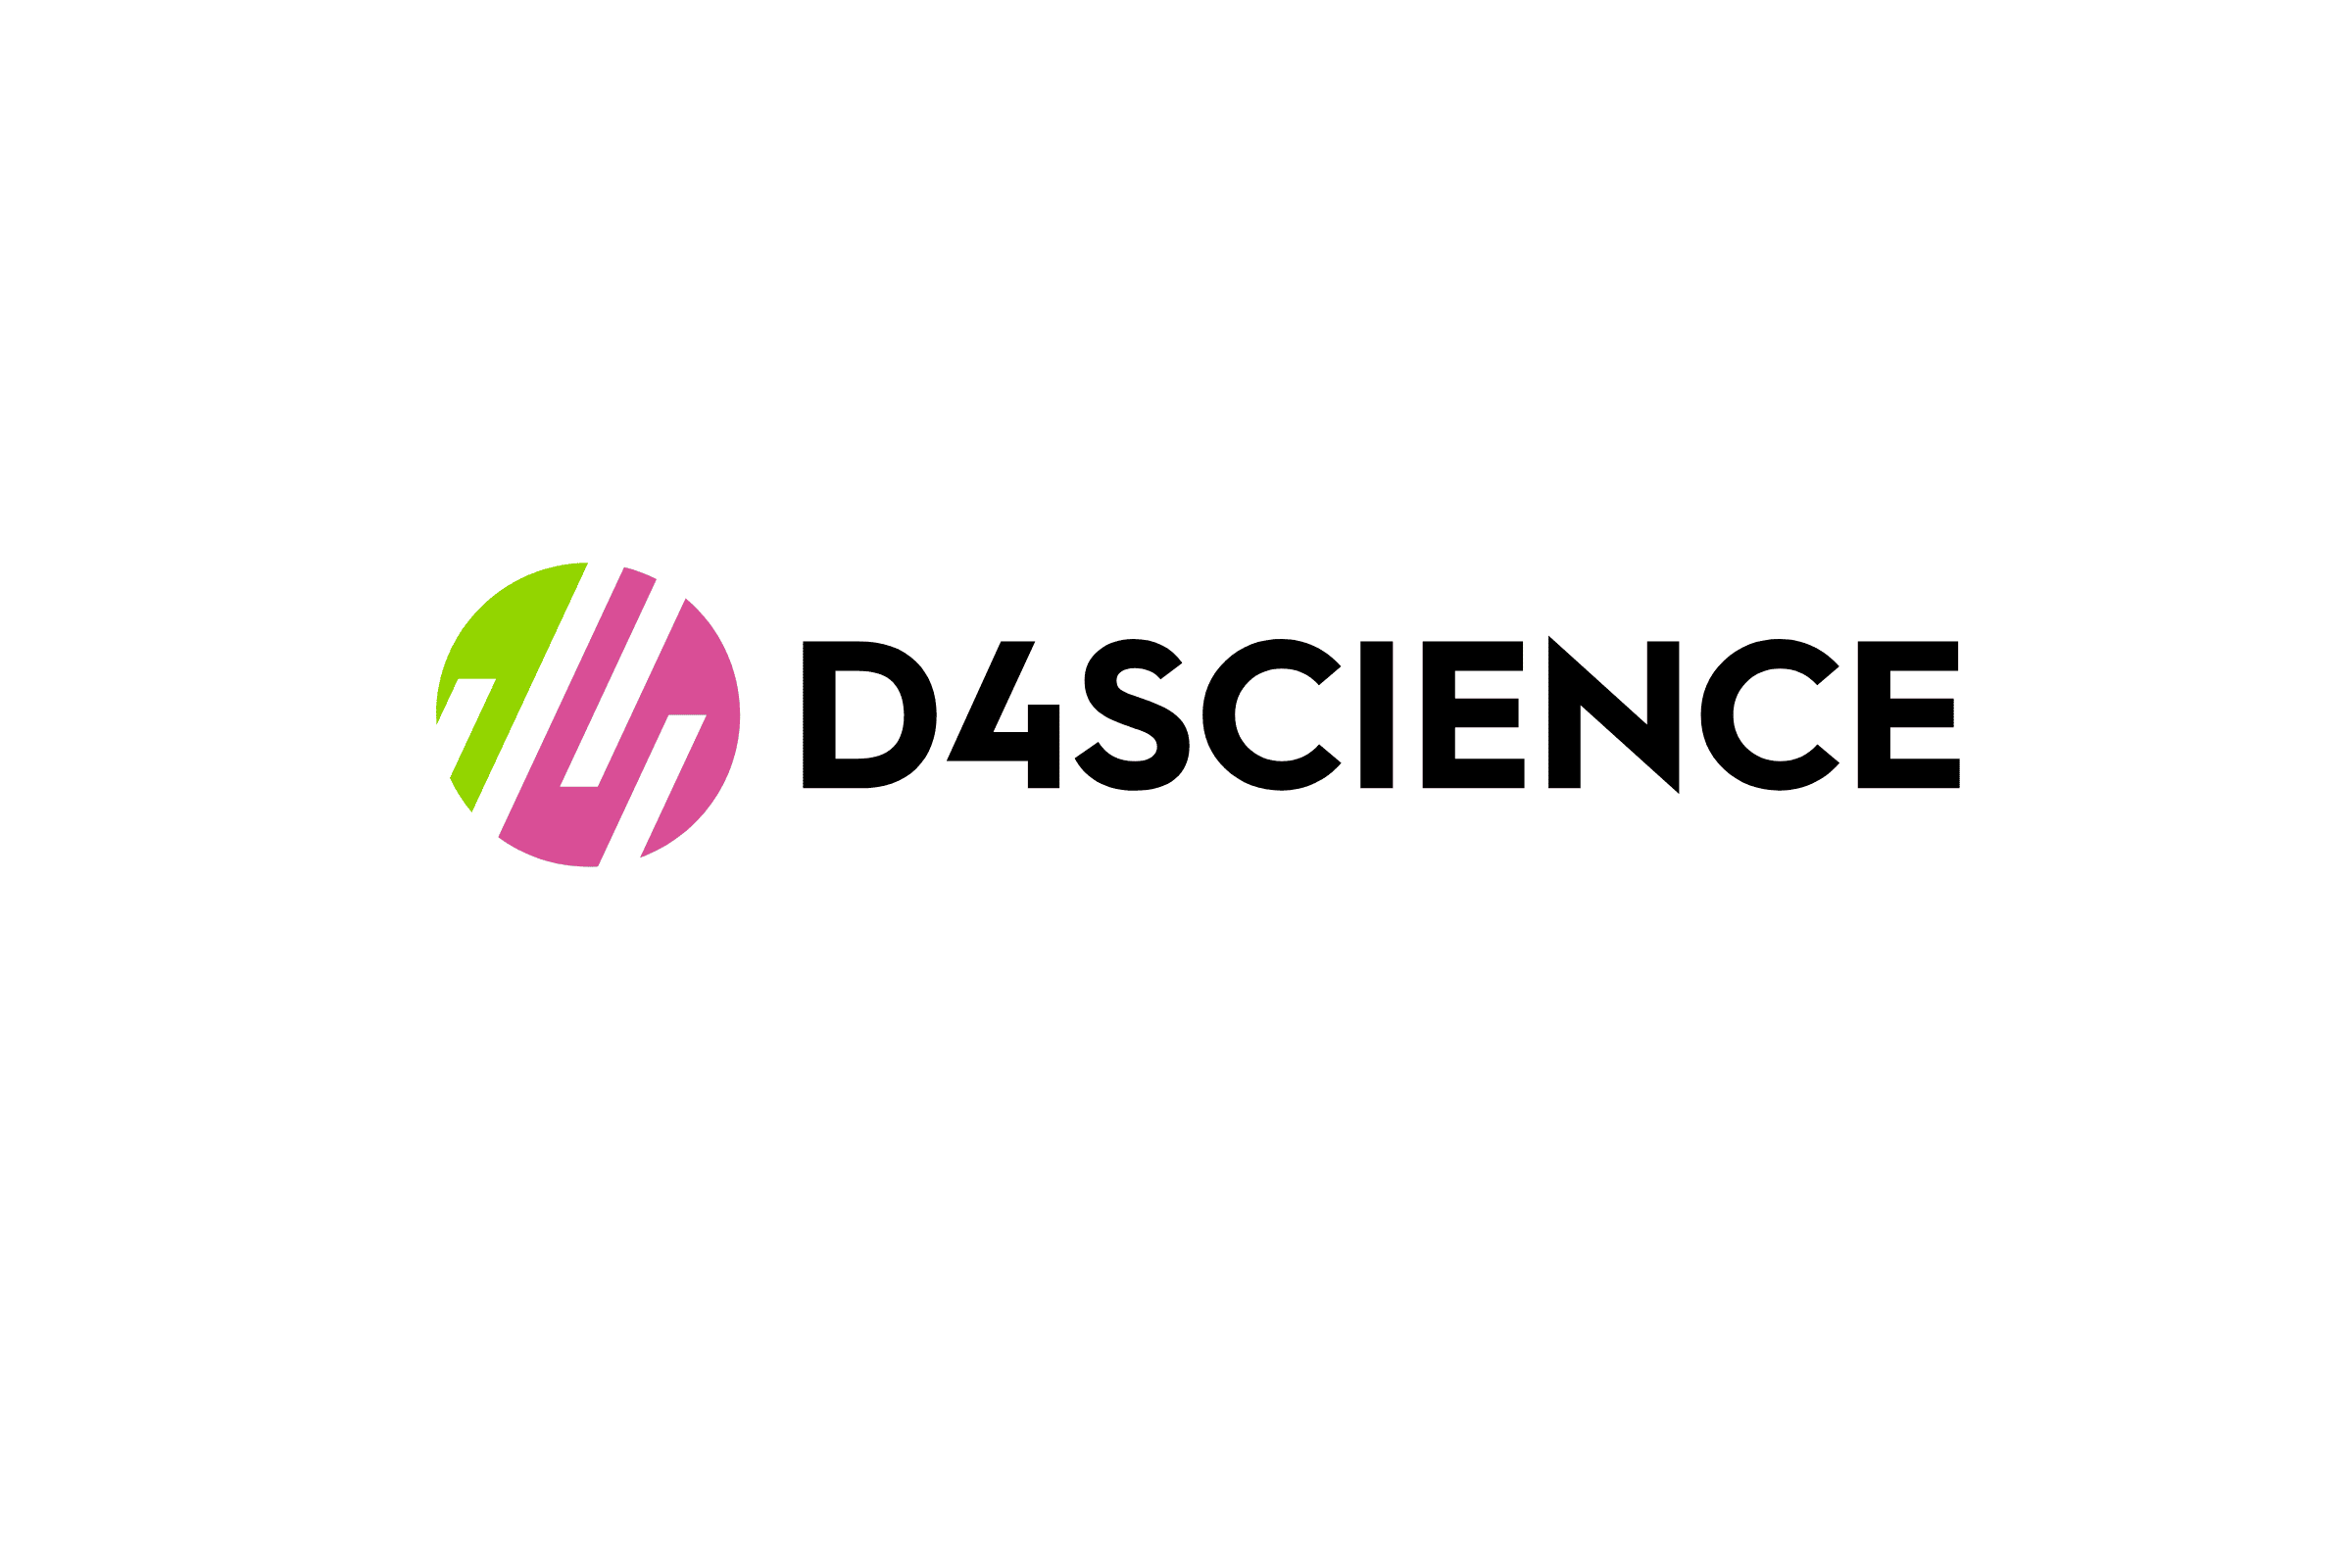 D4Science